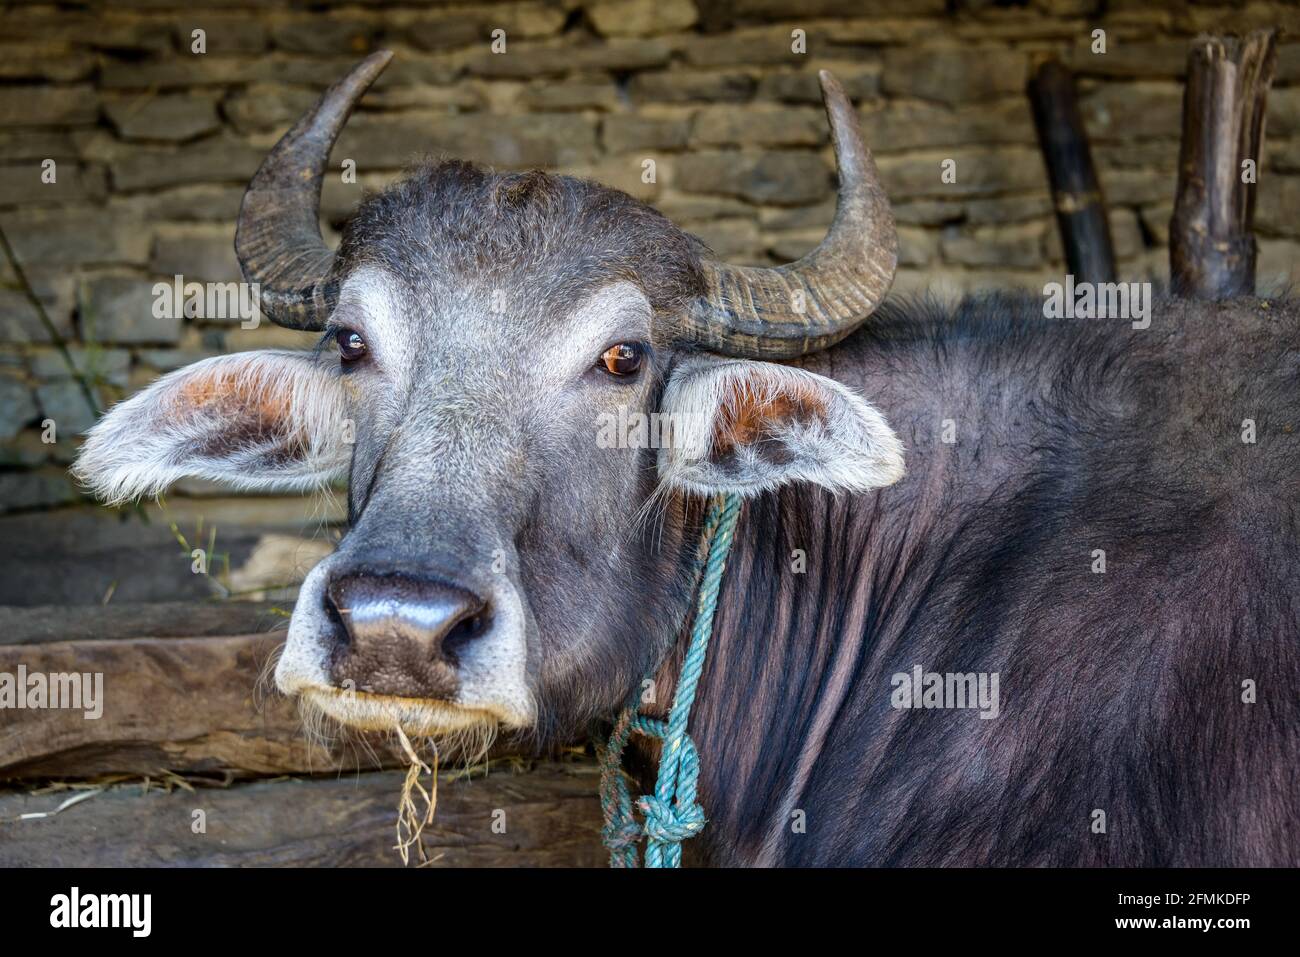 A buffalo in a stone barn, Nepal Stock Photo